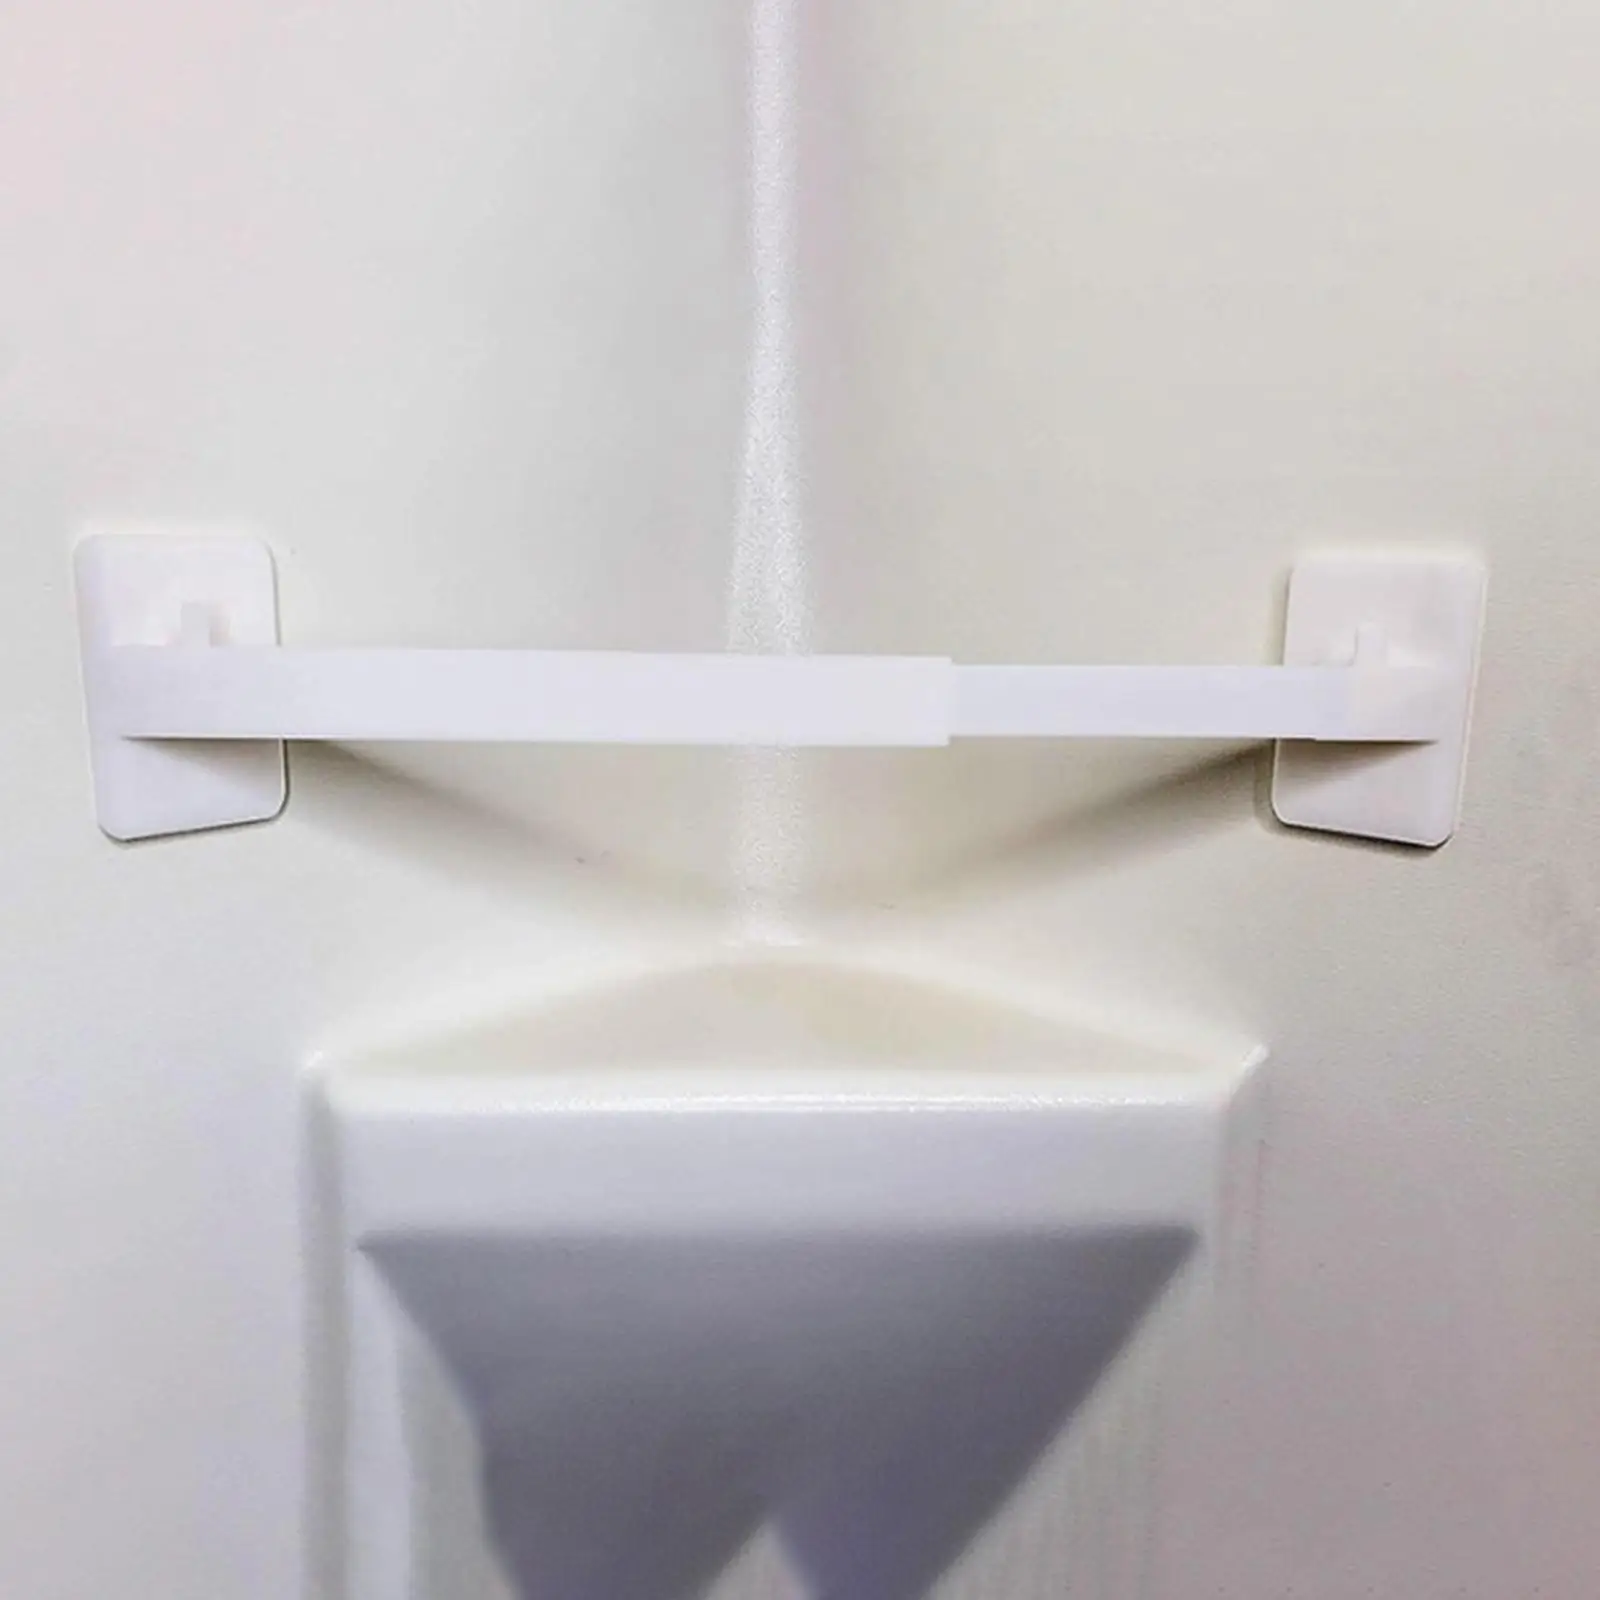 RV Shower Corner Storage Bar Bathroom Accessories Multipurpose Adjustable for Campers Washroom Trailers Restroom Bathroom